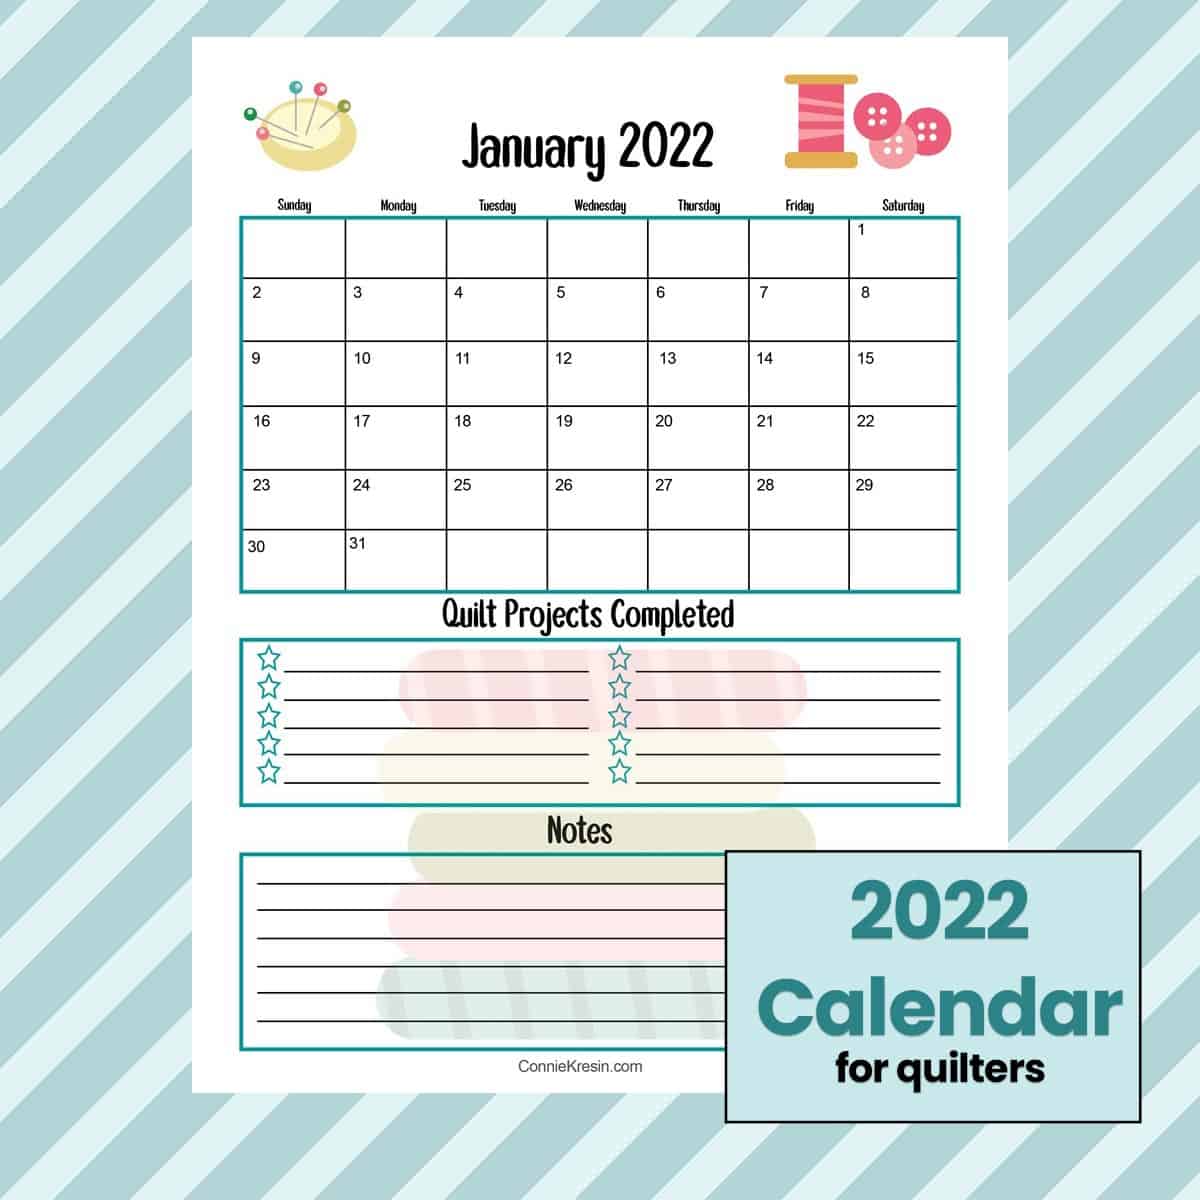 January 2022 quilt calendar